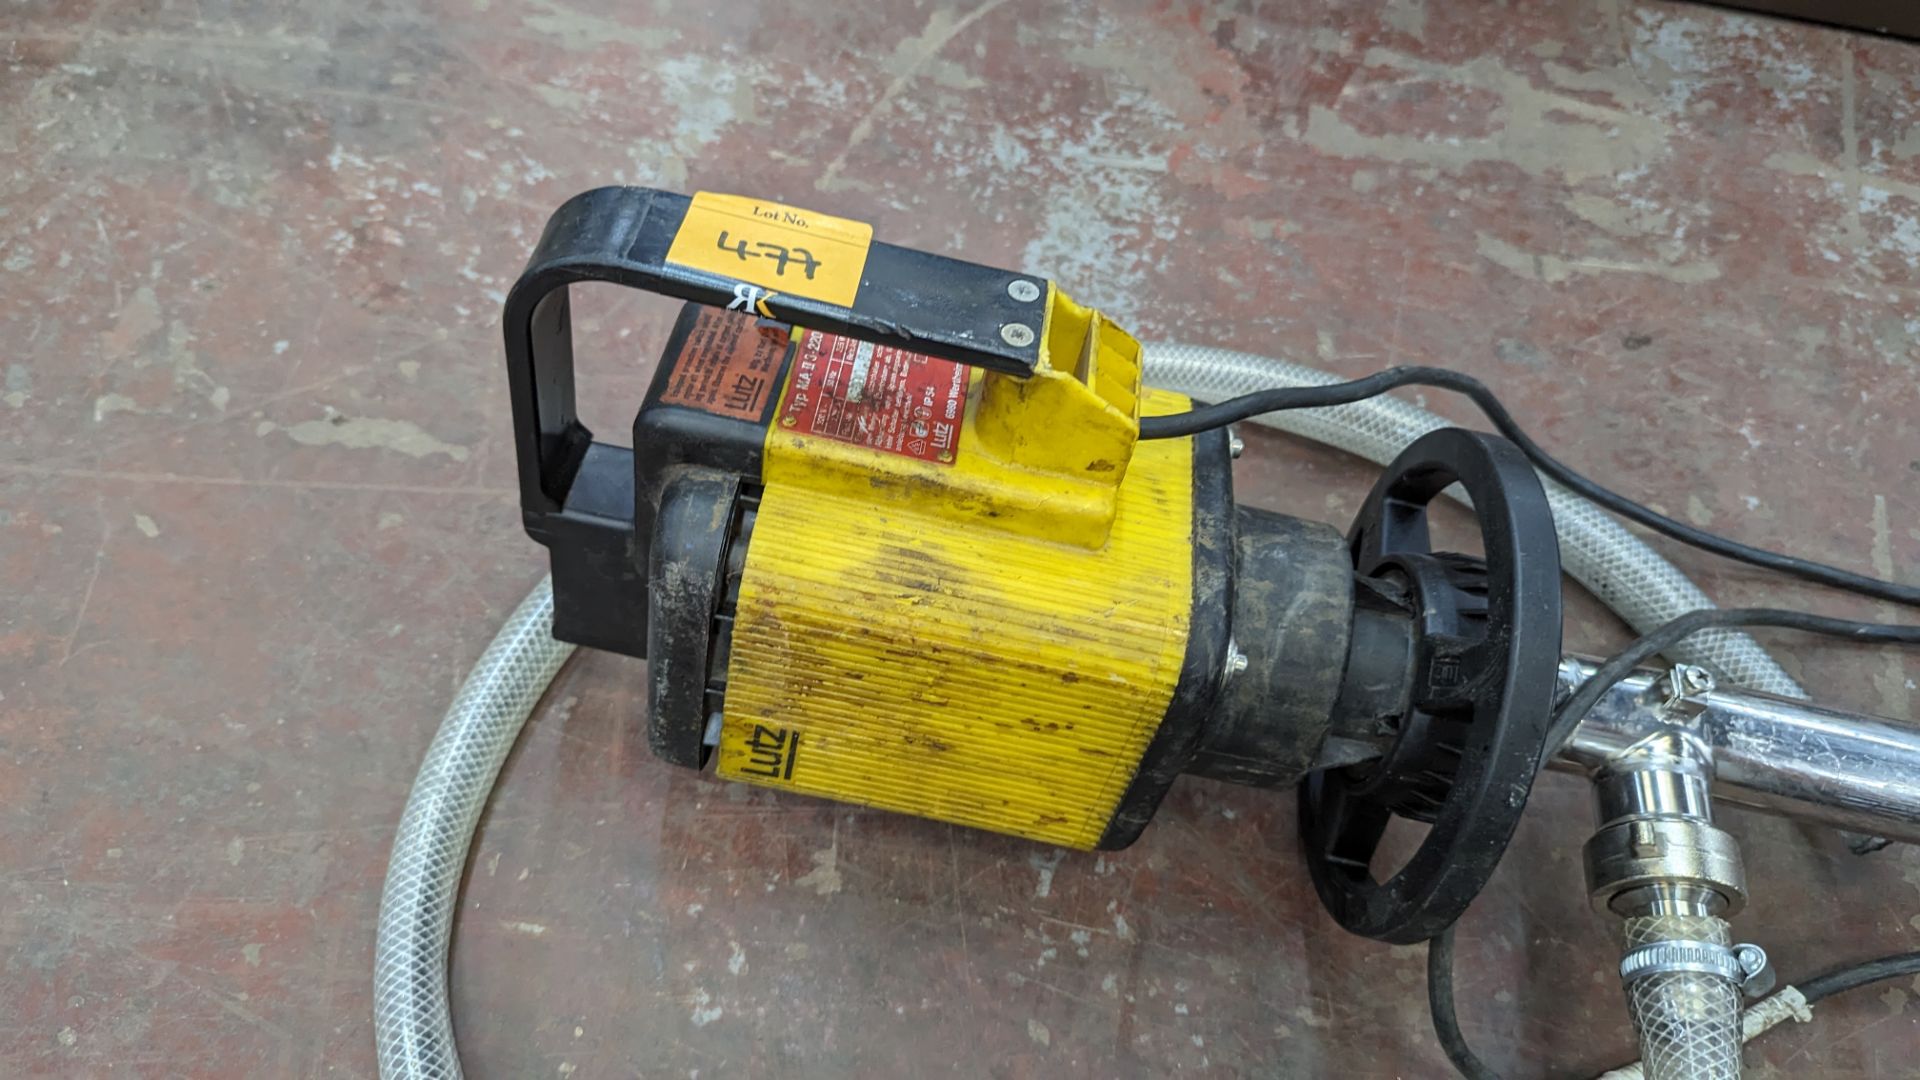 Lutz electric barrel pump - Image 5 of 8